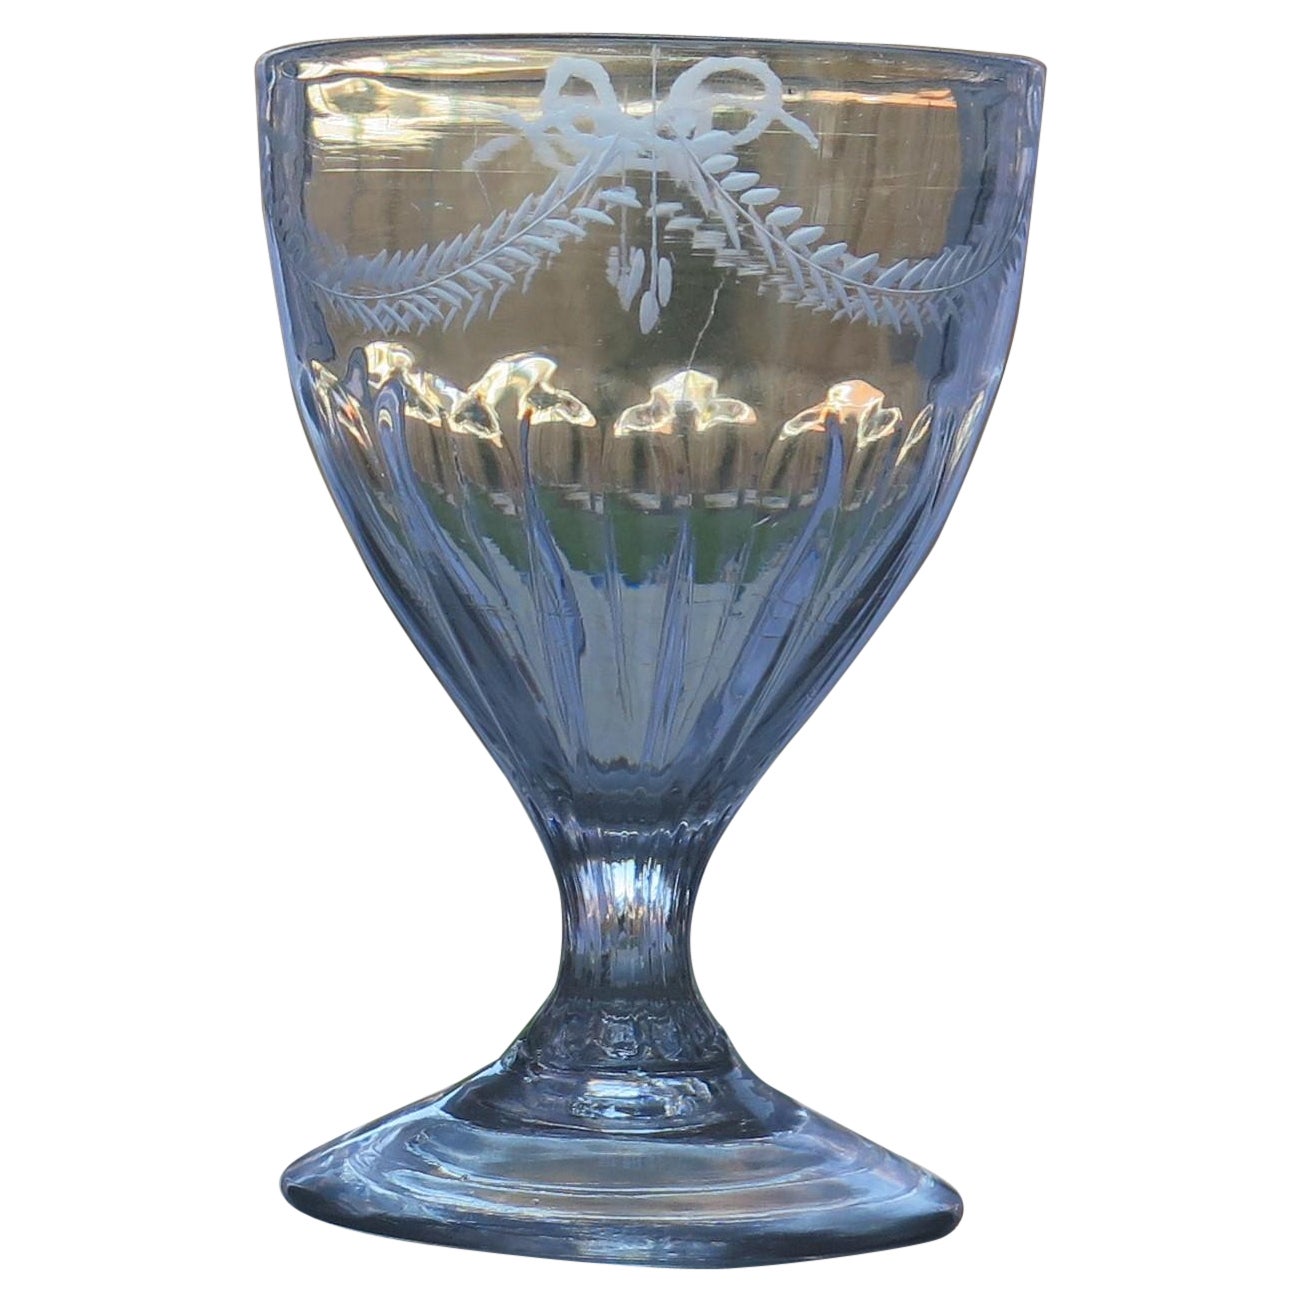 Georgian Rummer Drinking Glass Engraved Handblown Lead Glass, English, Ca 1800